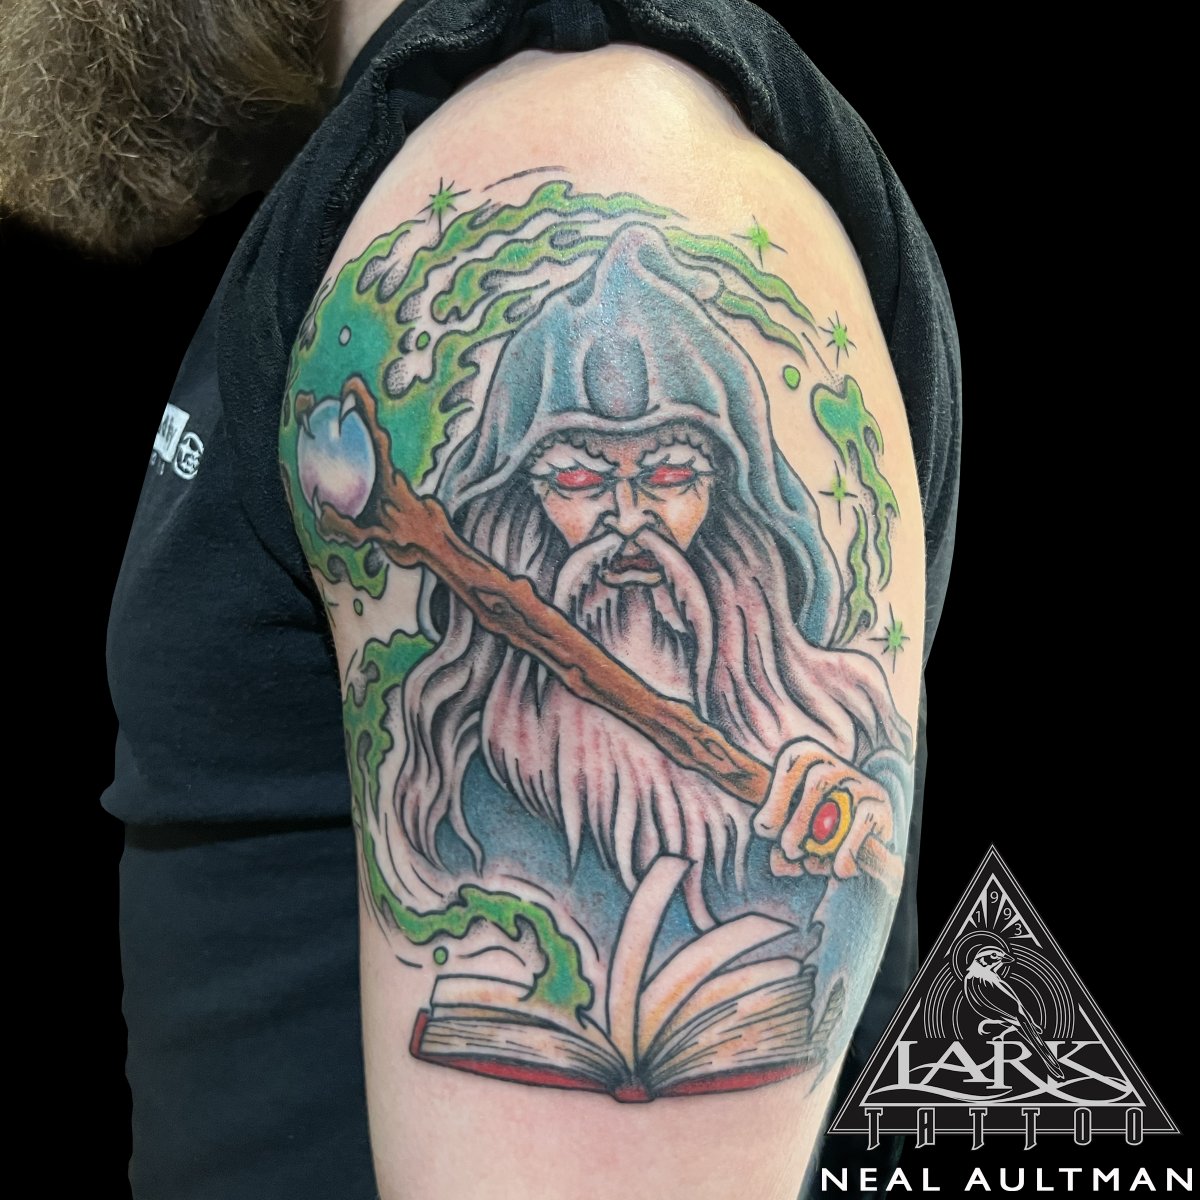 #Tattoo by #LarTattoo artist Neal Aultman.
See more of Neal's work here: larktattoo.com/nealaultman
#Tattoos #Wizard #WizardTattoo #Warlock #WarlockTattoo #ColorTattoo #TraditionalTattoo #ArmTattoo #TattooArtist #Tattoist #Tattooer #LongIslandTattooArtist #LongIslandTattooer